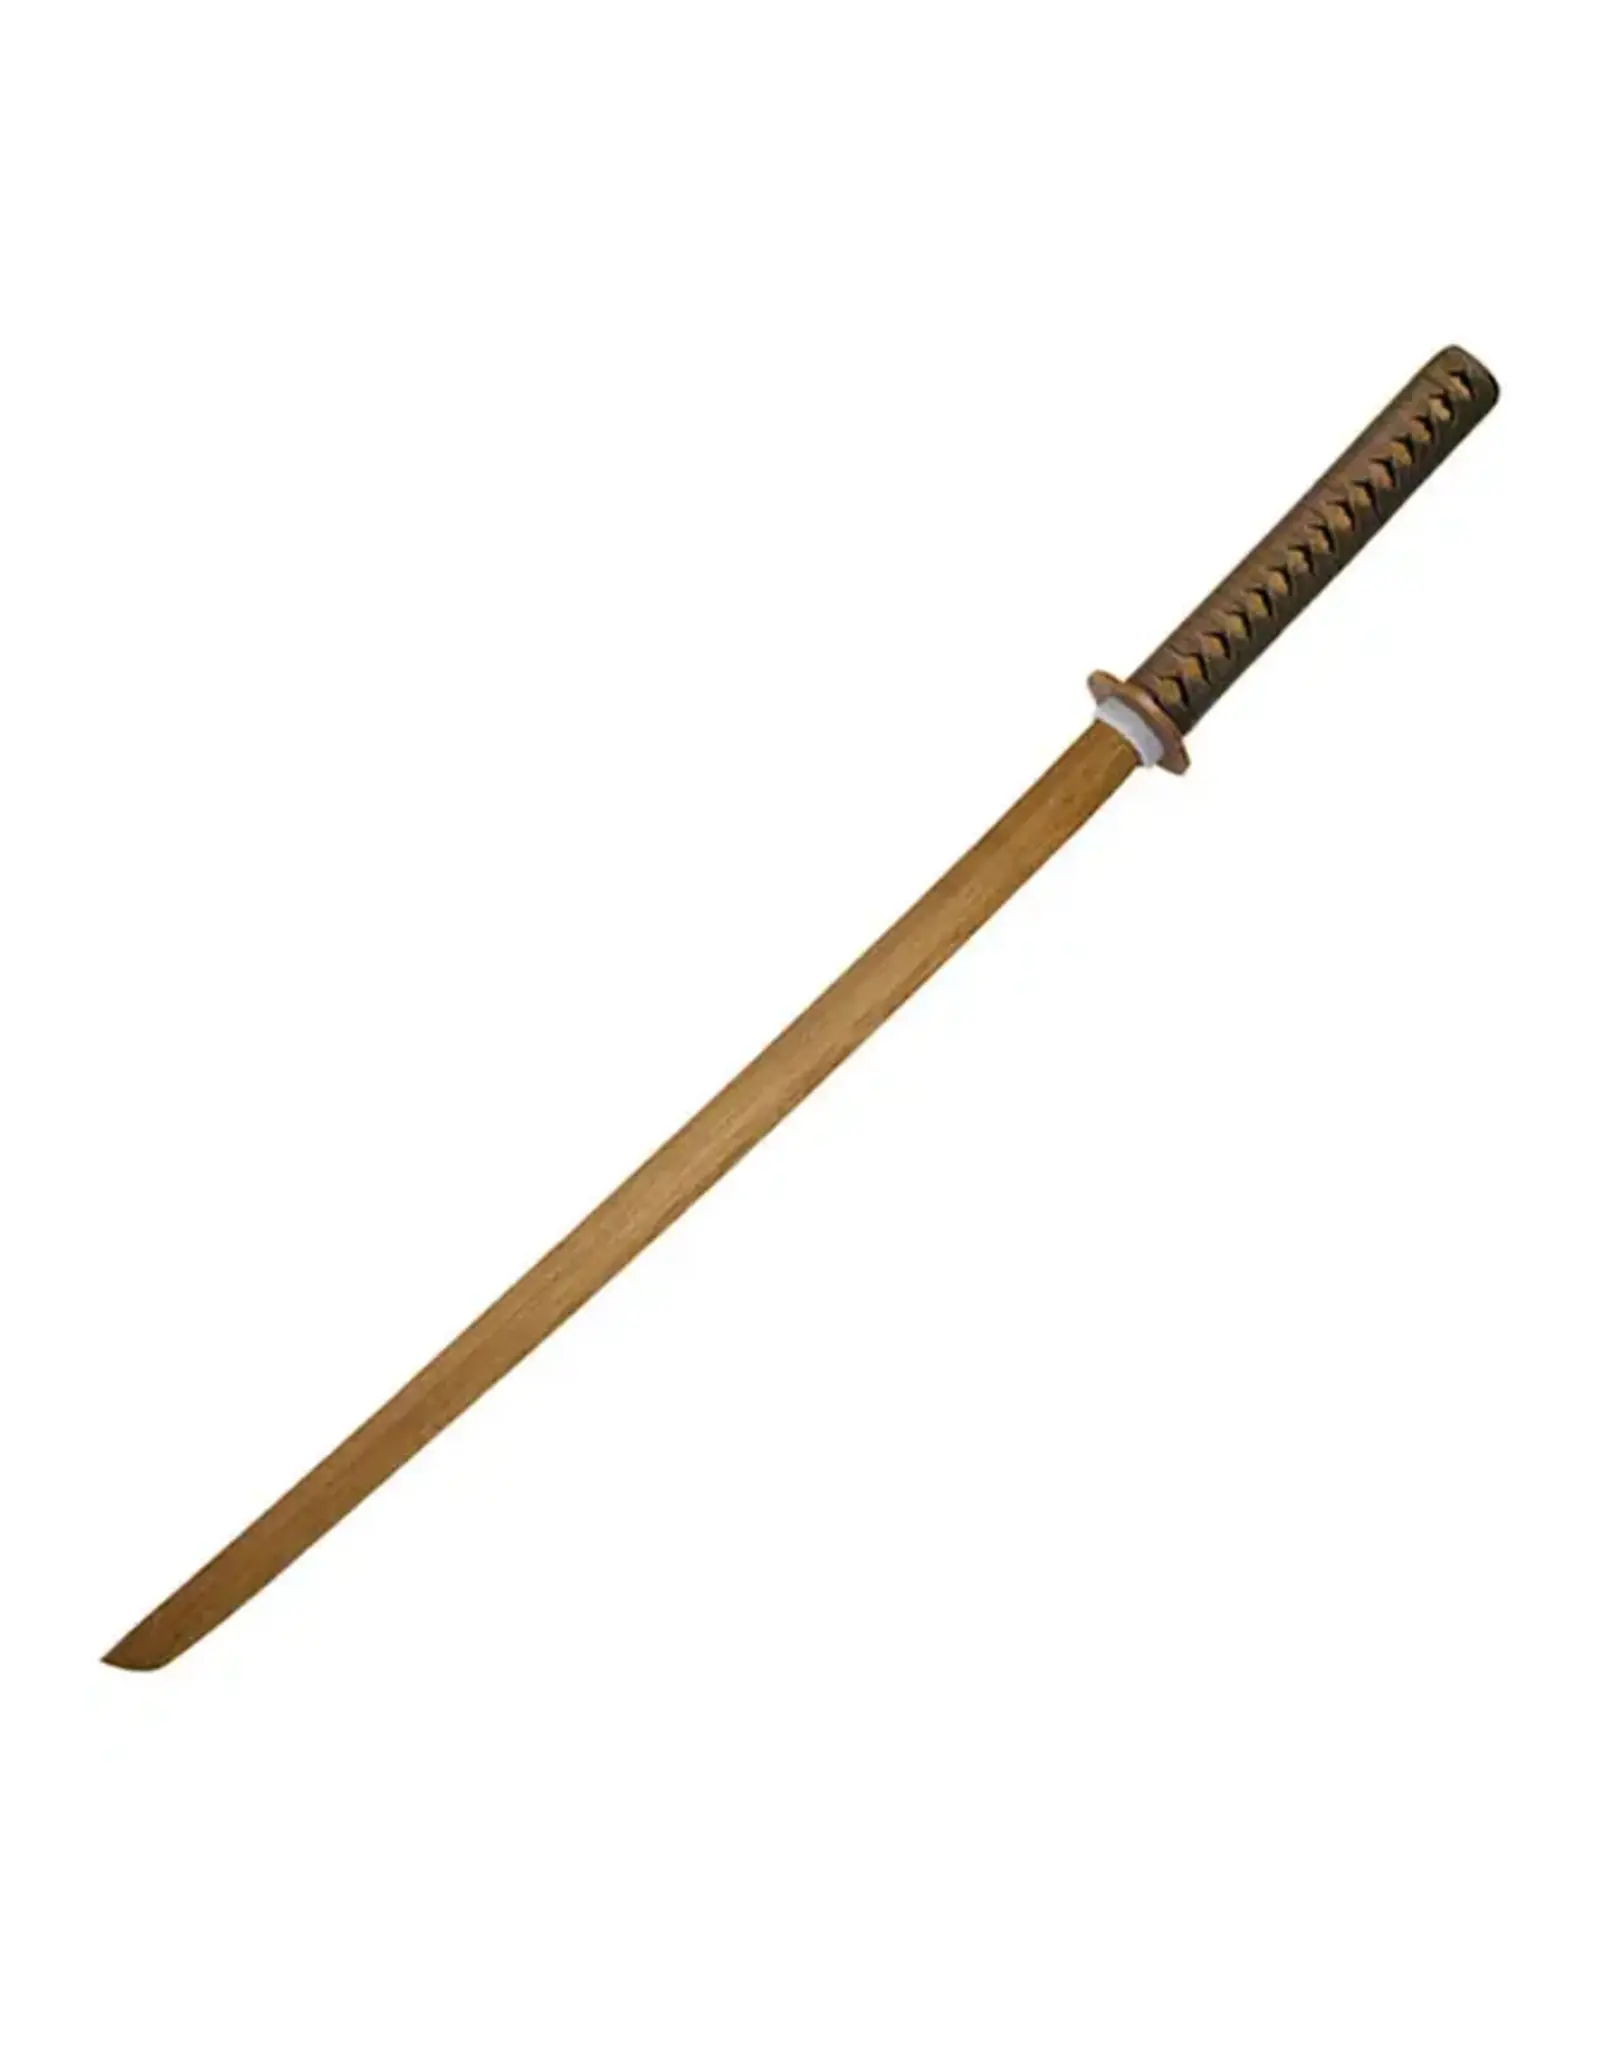 BladesUSA - Martial Arts Training Equipment - Samurai Wooden Training Sword - 1807-BW